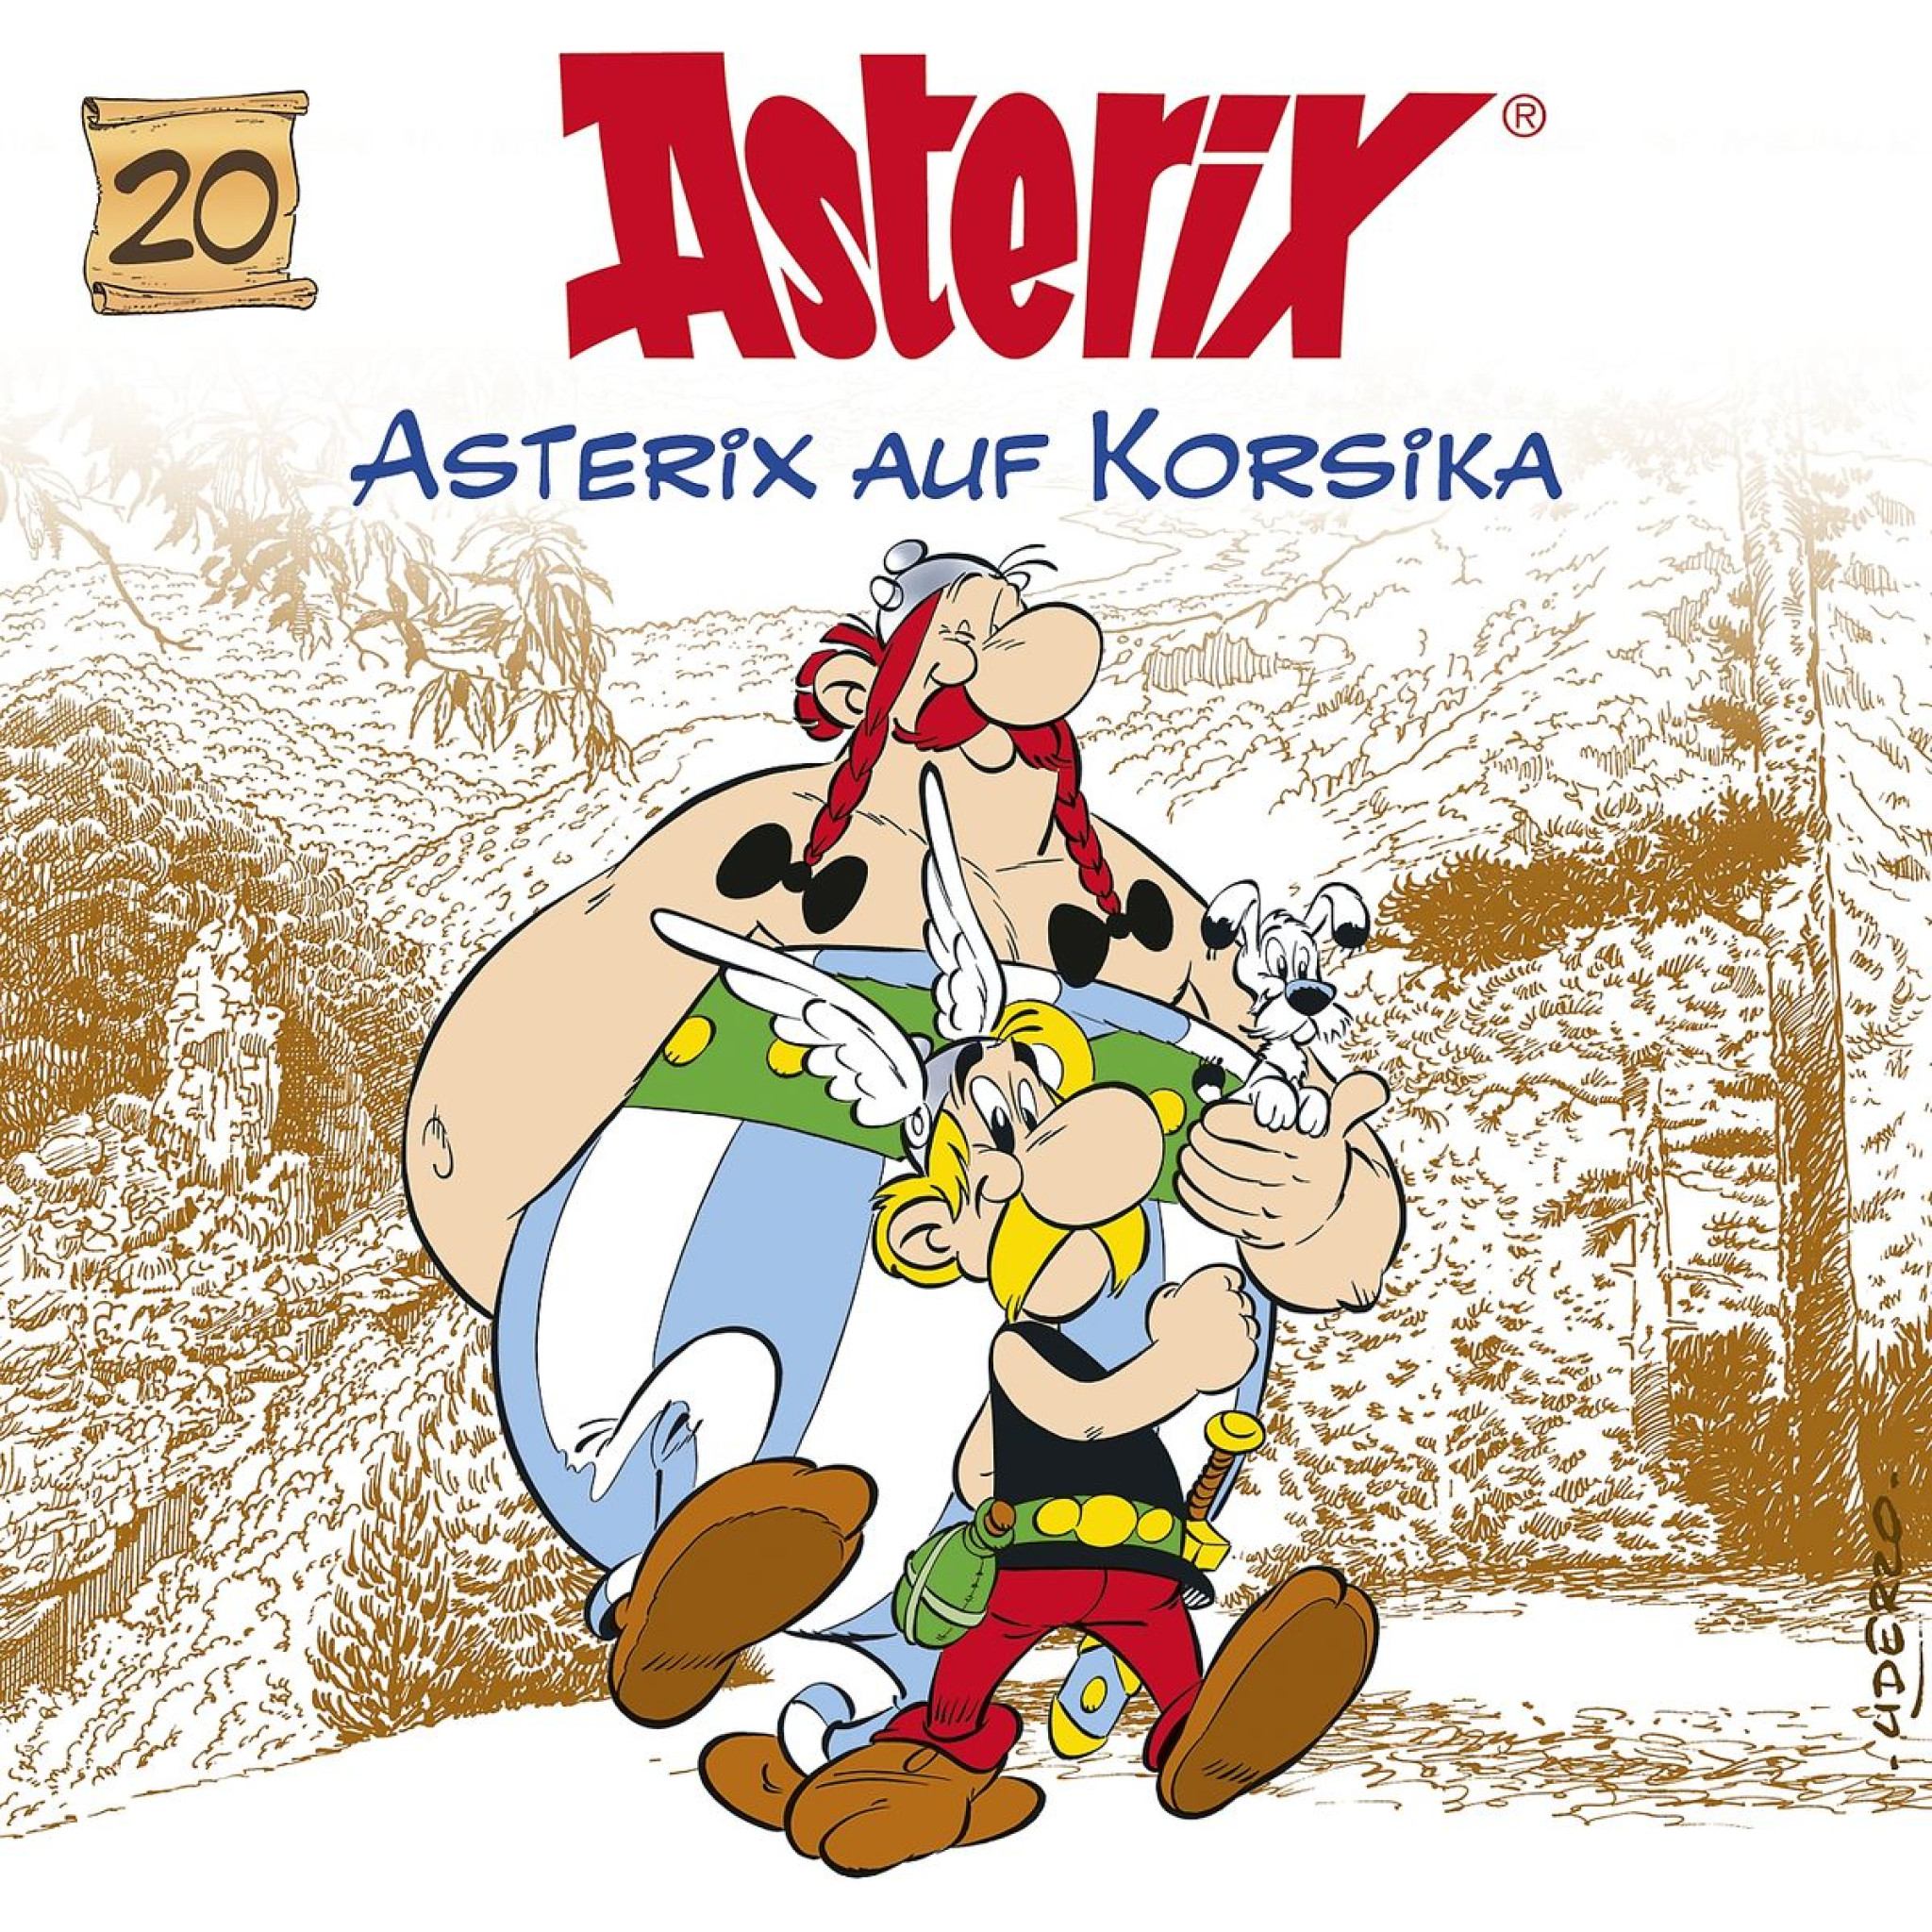 20: Asterix auf Korsika